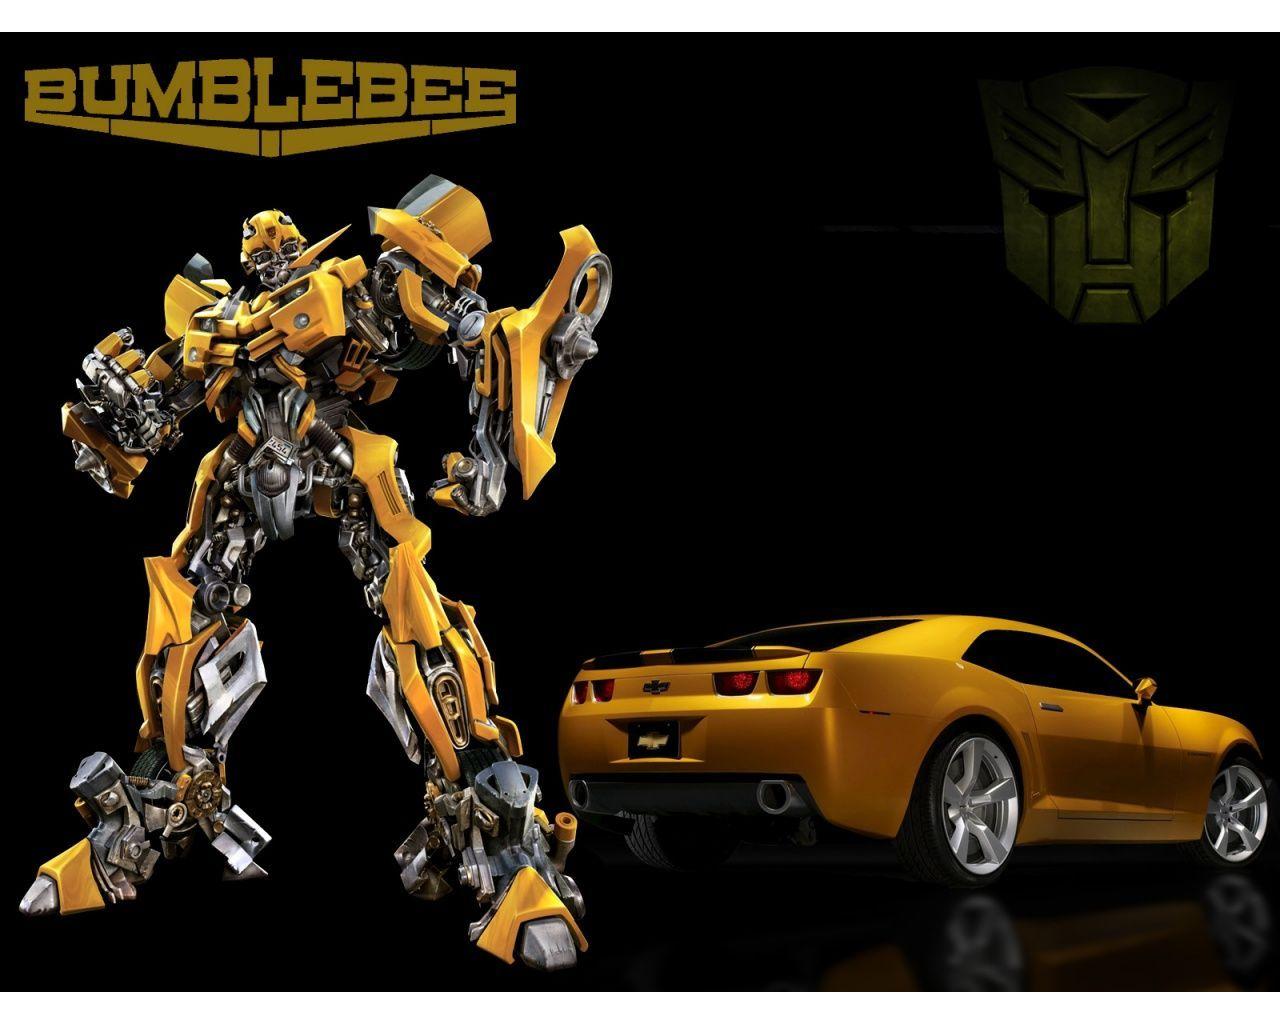 Wallpaper For > Transformers 4 Wallpaper Bumblebee